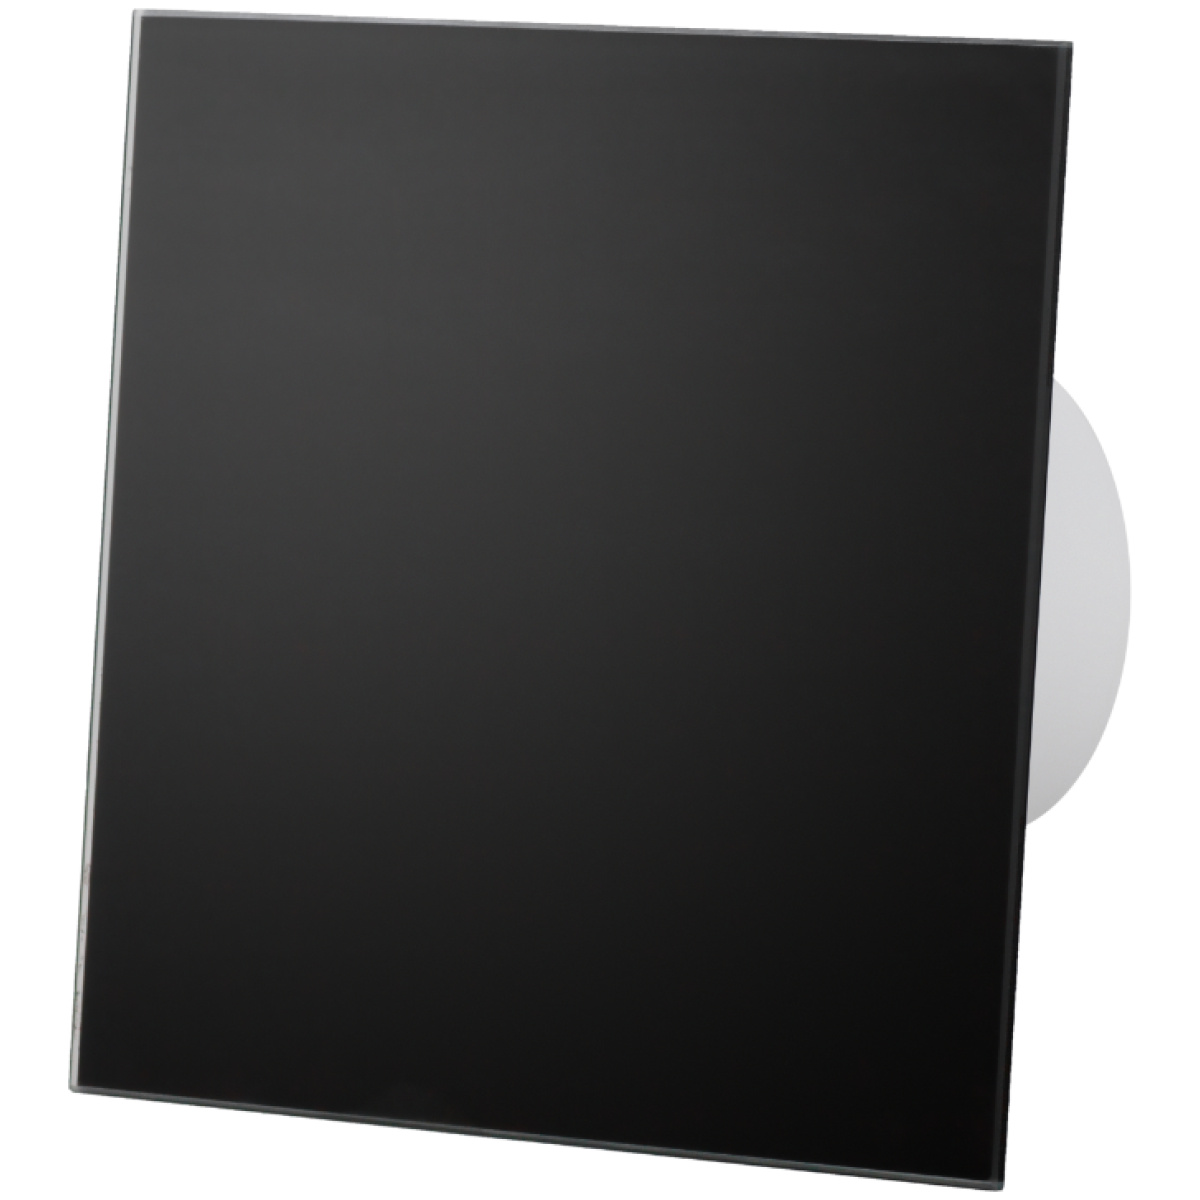 Zestaw: dRim 100 TS BB wentylator + Panel szklany czarny mat